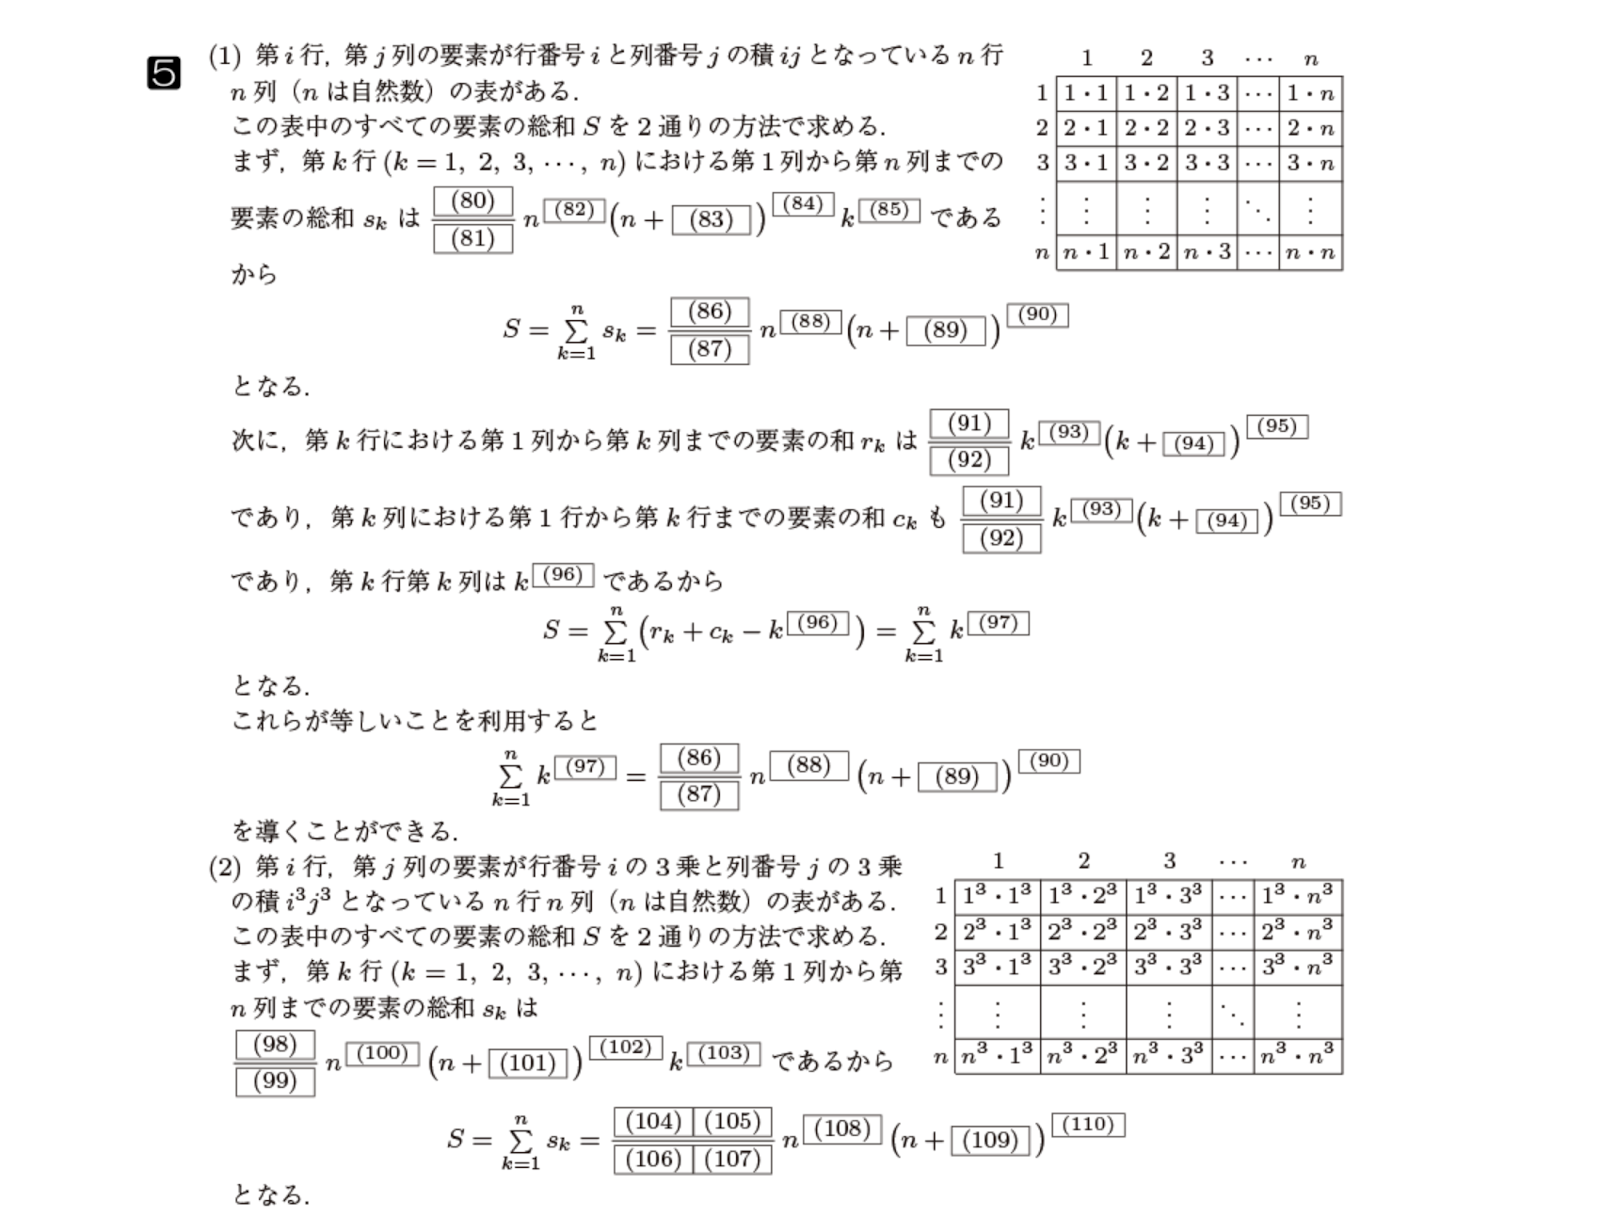 慶應義塾大学総合政策学部の数学の傾向と対策